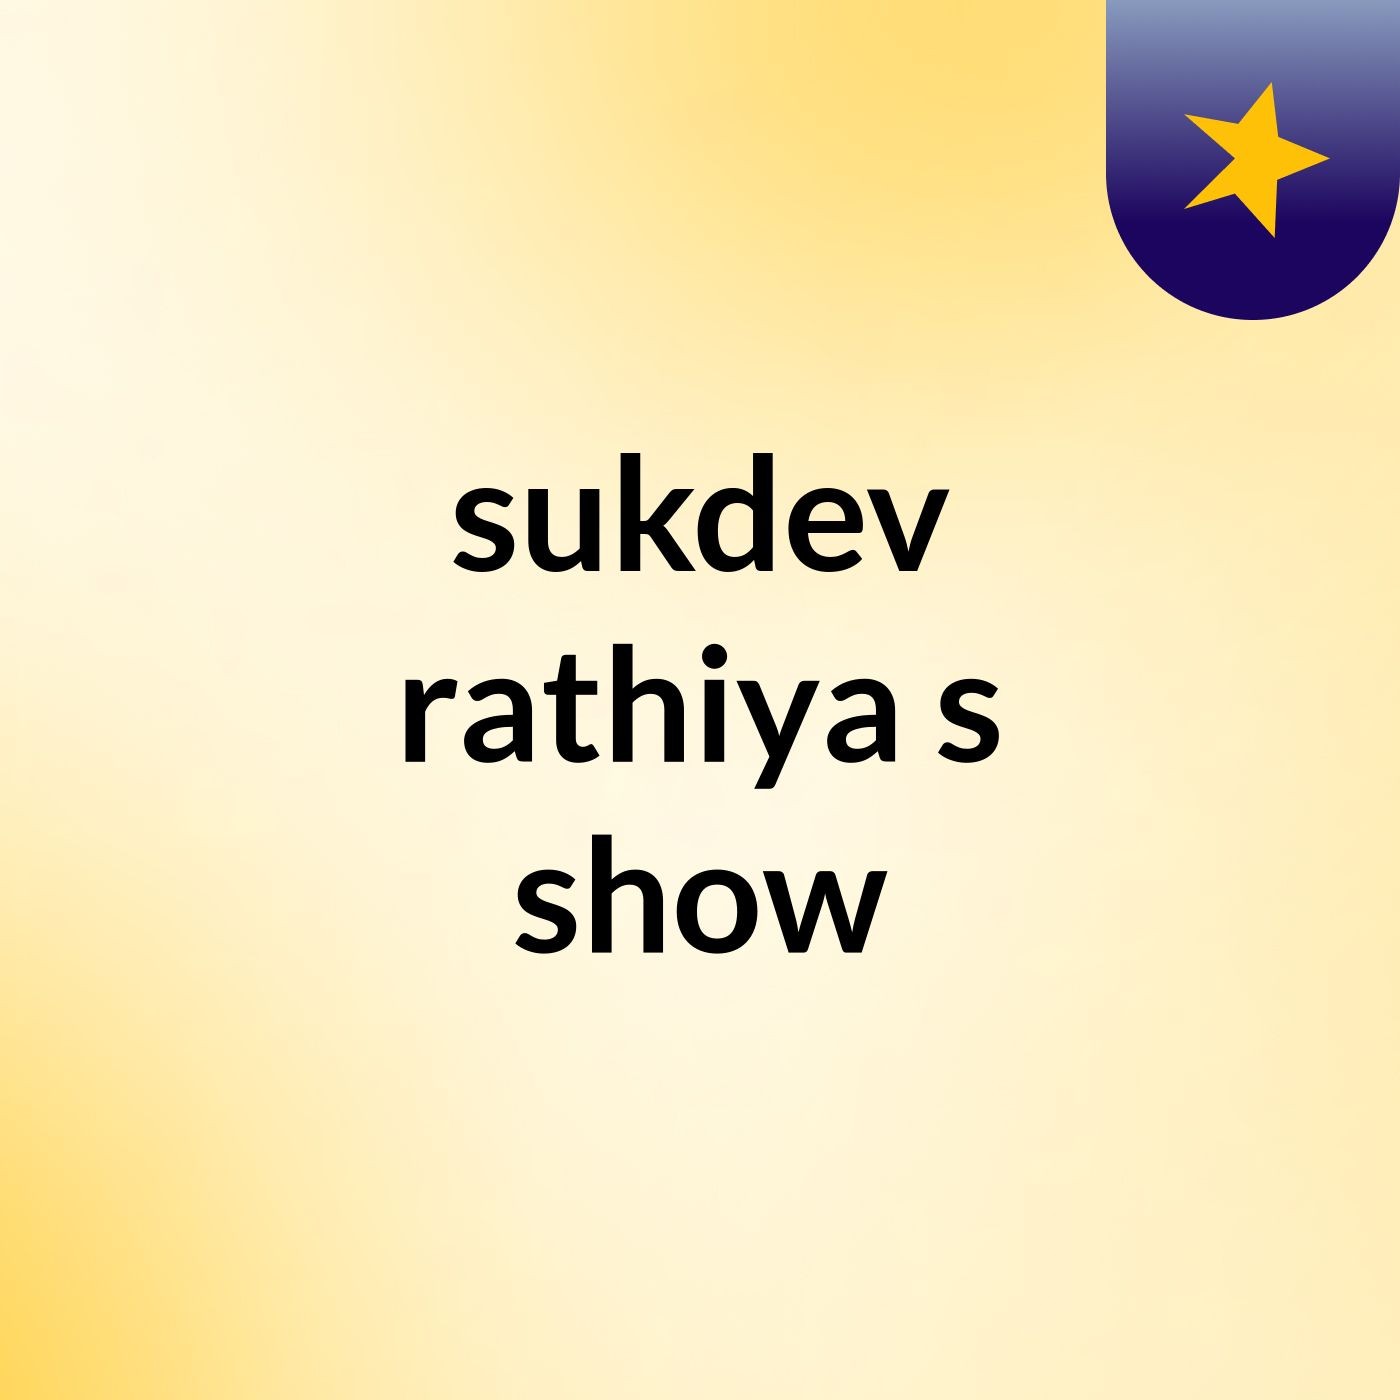 sukdev rathiya's show